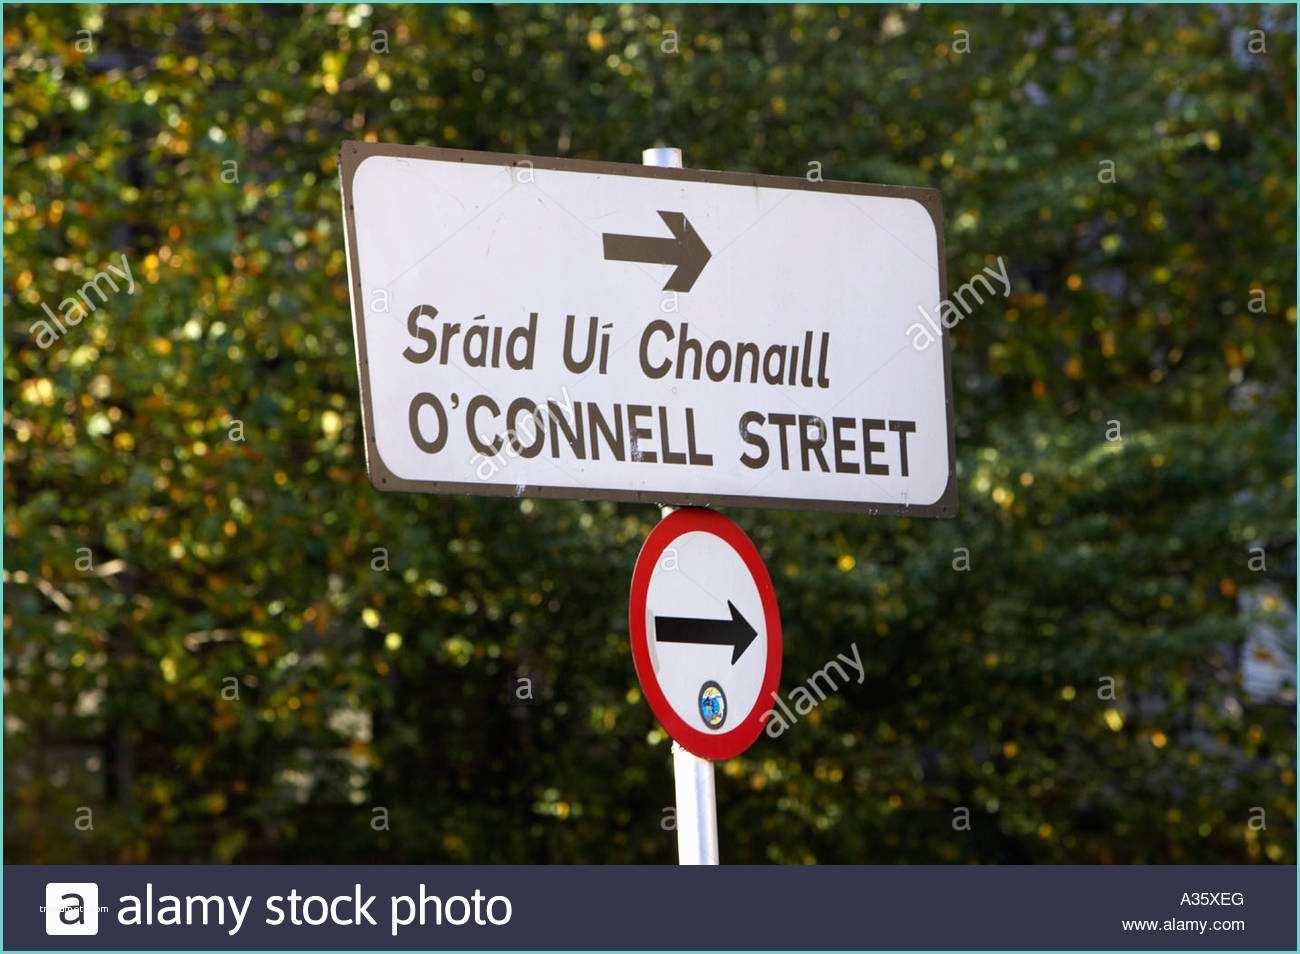 Panneau De Signalisation En Anglais Gaelic Road Signs S & Gaelic Road Signs Alamy